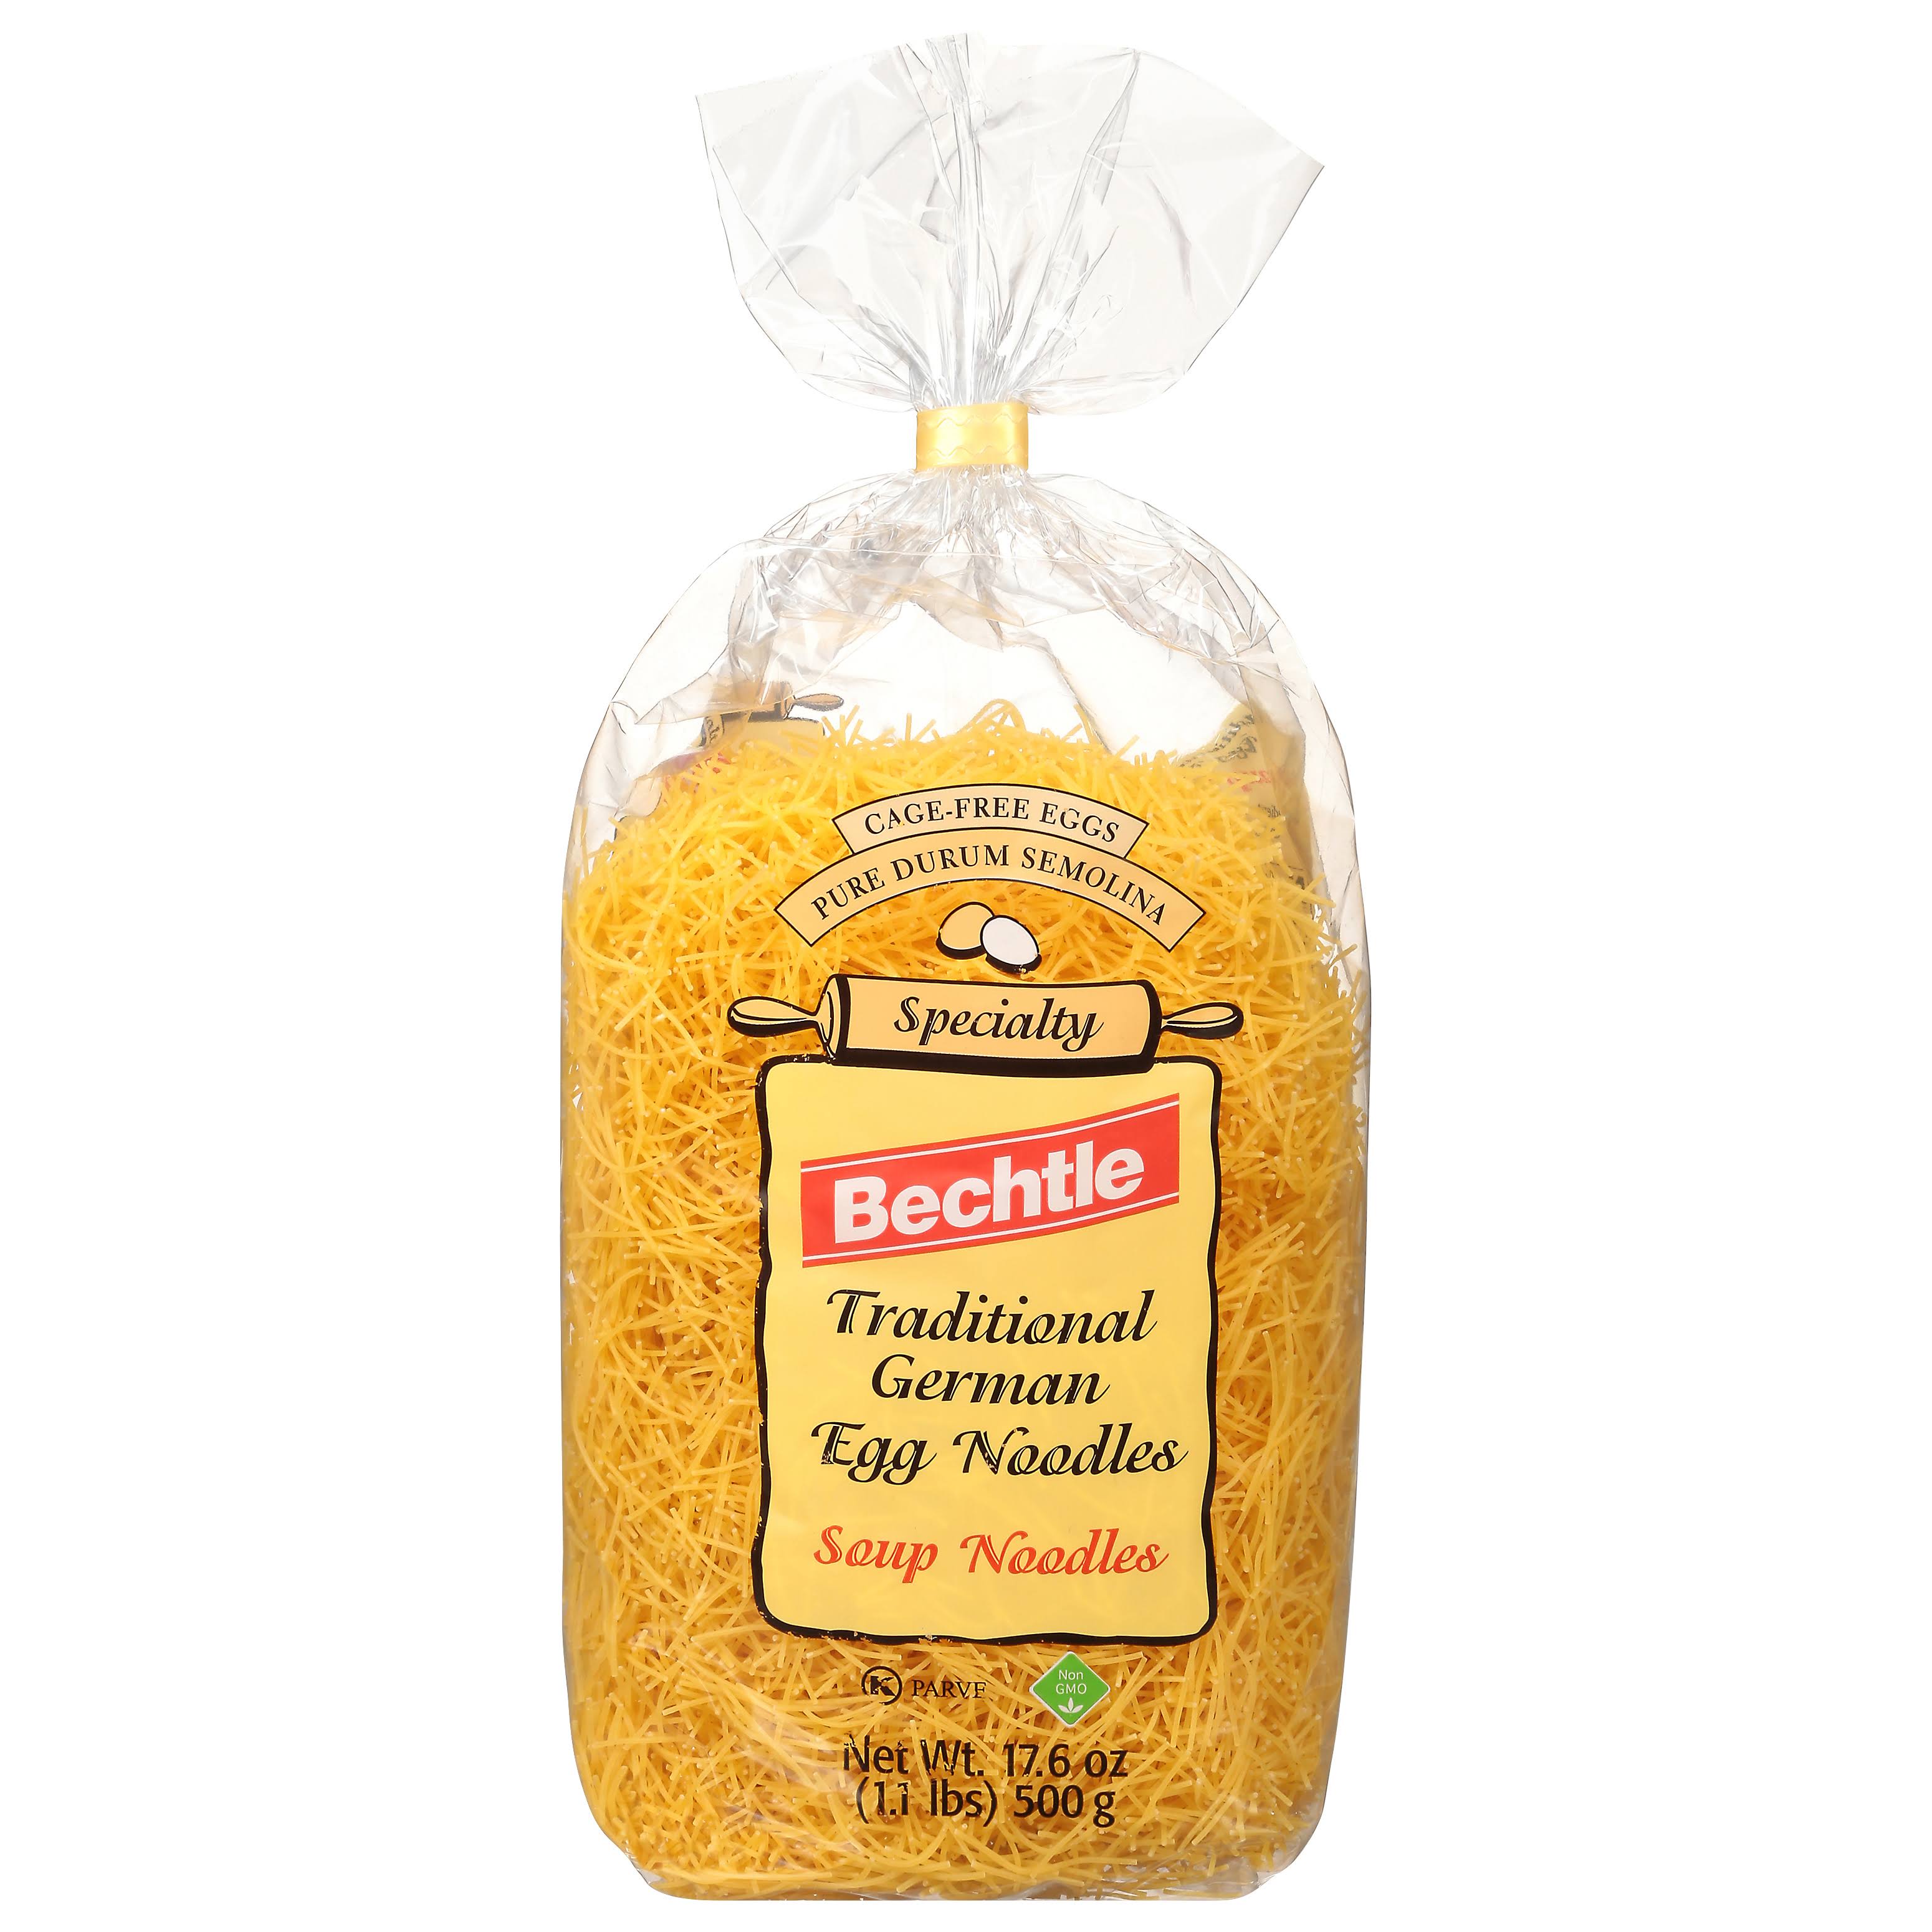 Bechtle Traditional Thin German Egg Noodles - 17.6oz